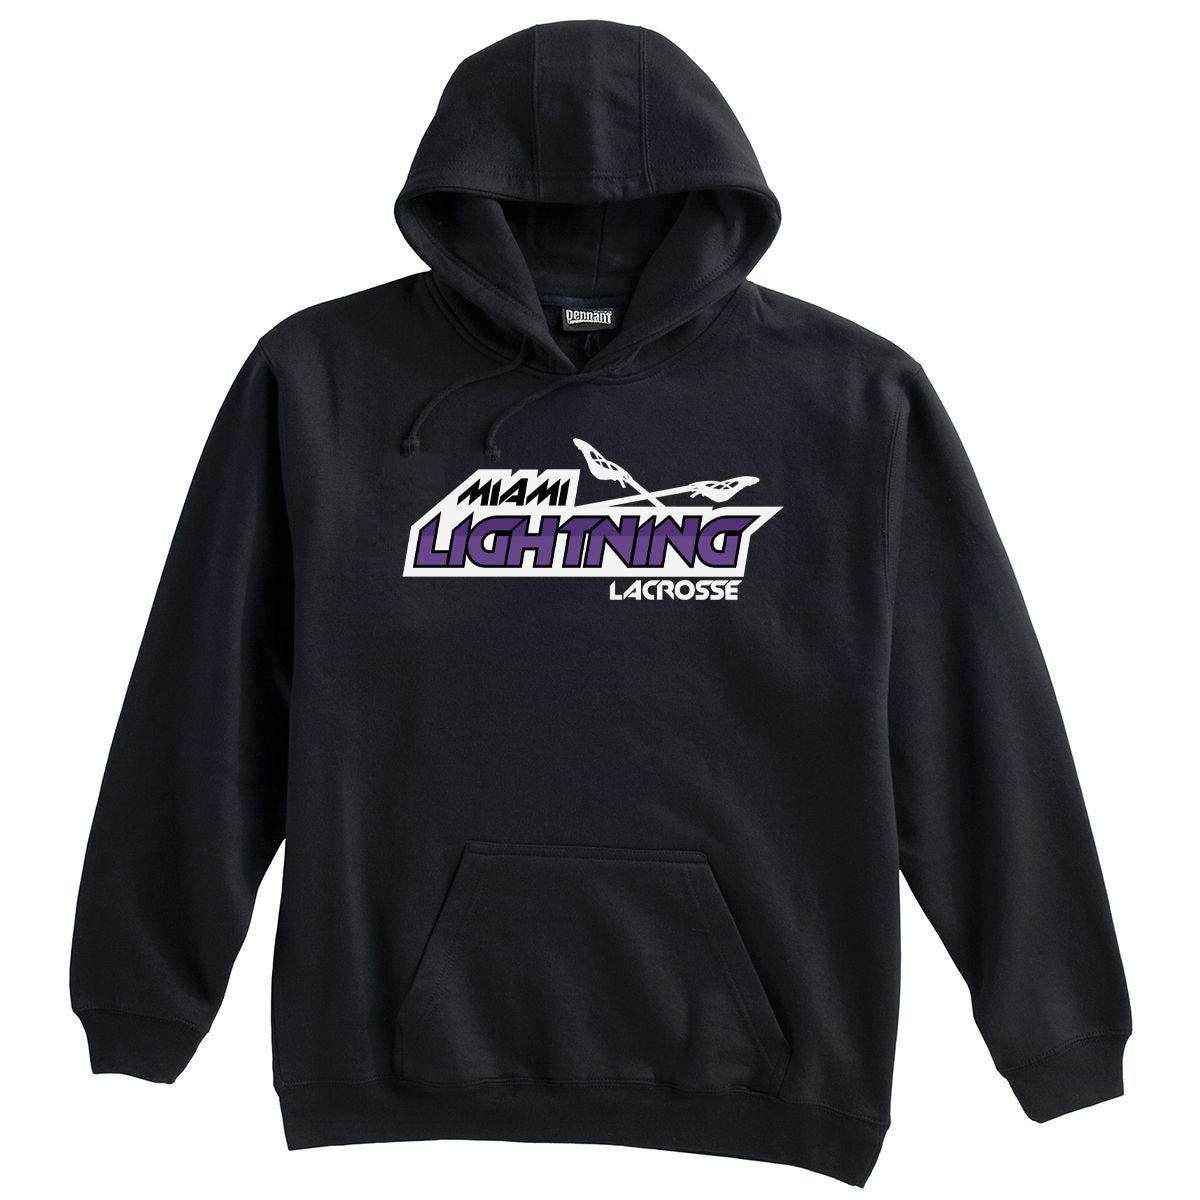 Miami Lightning Lacrosse Black Sweatshirt